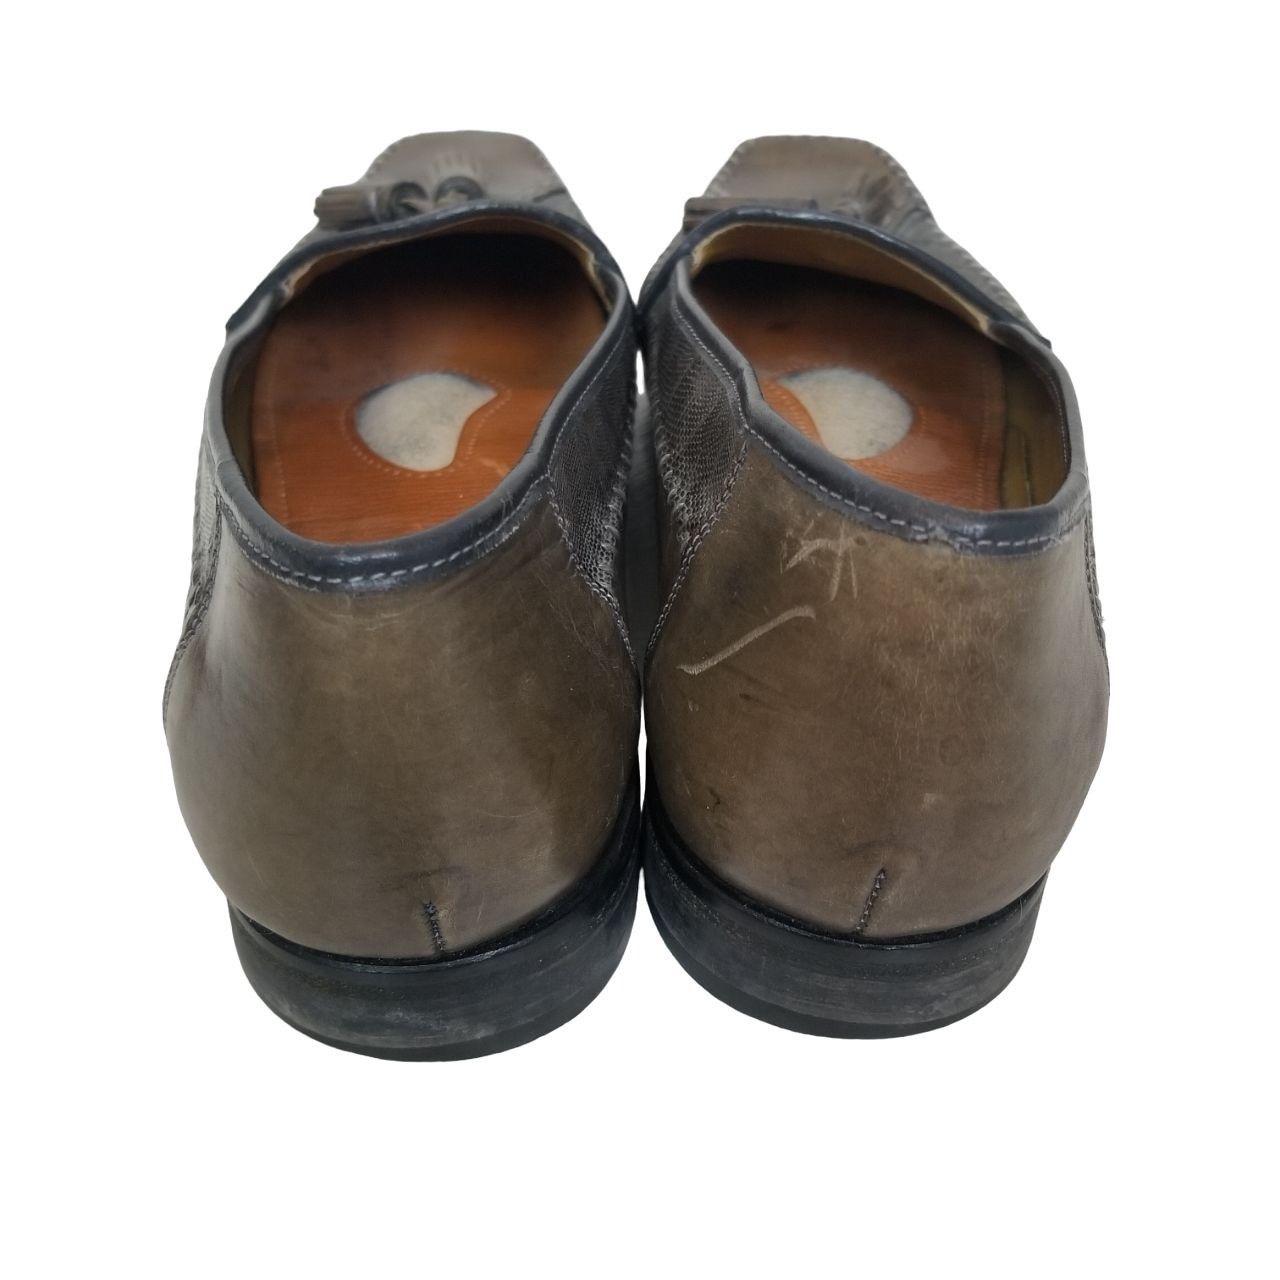 Sandro Moscoloni Sandro Moscoloni 11.5AA Leather Slip On Tassel Loafers Size US 11.5 / EU 44-45 - 7 Thumbnail